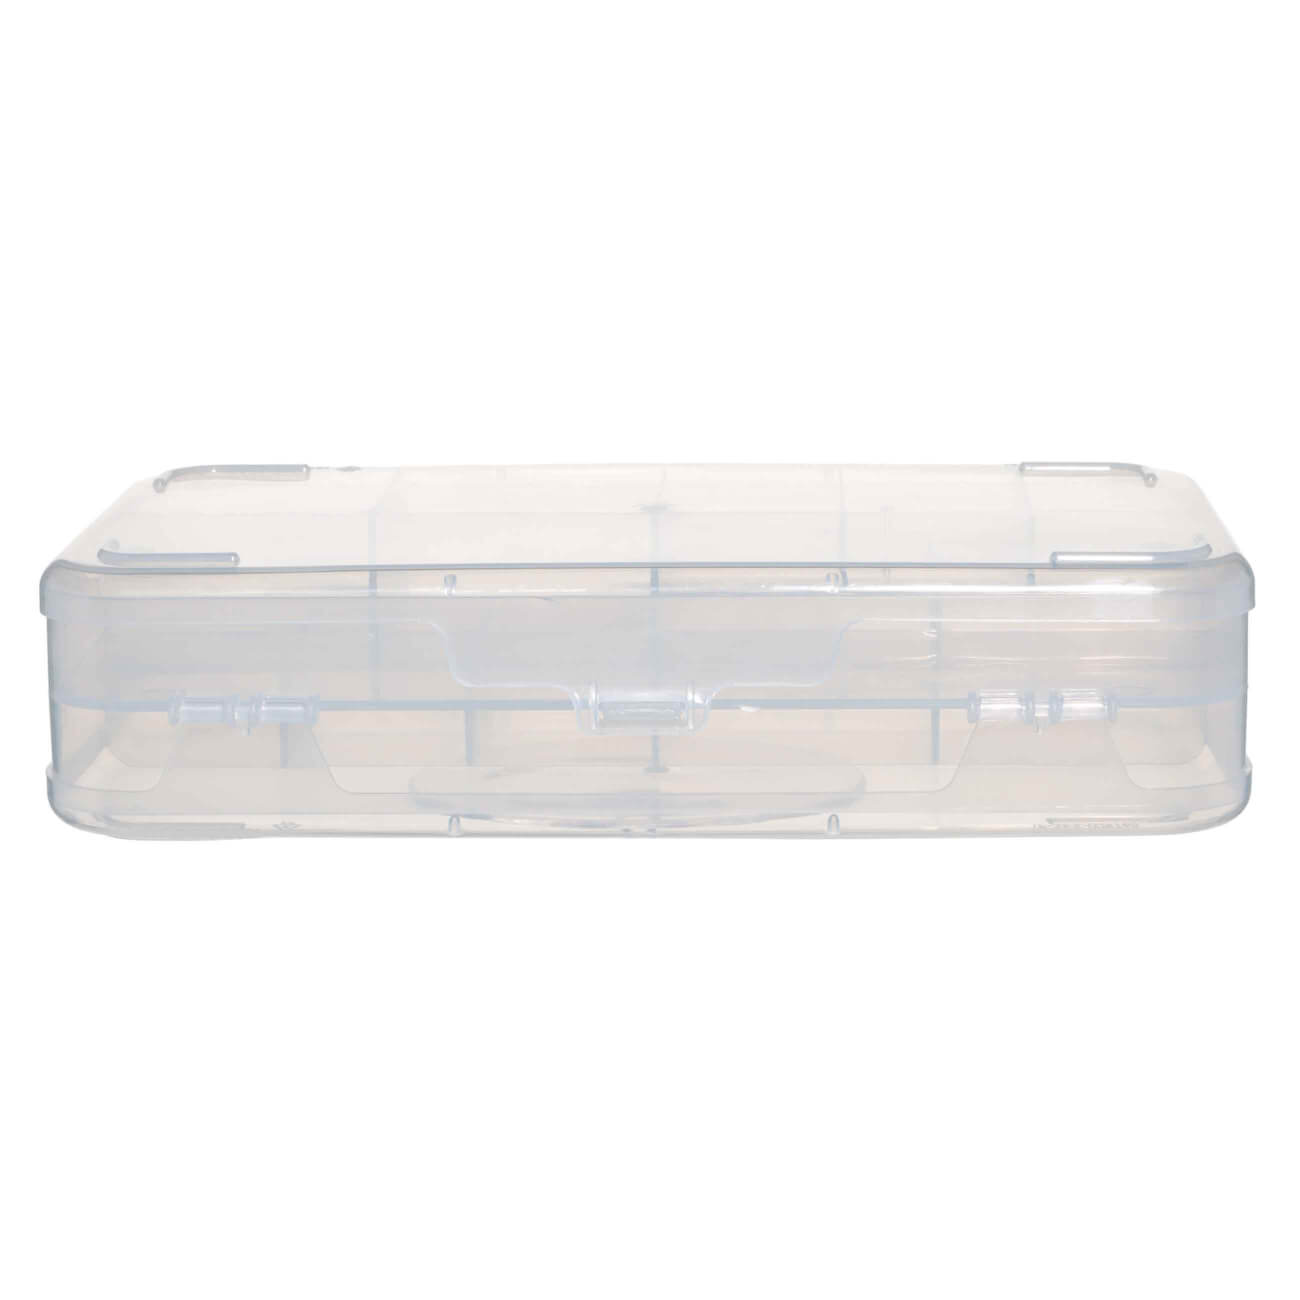 Контейнер-органайзер для хранения, 21х13 см, 2 уровня, пластик, Compact контейнер для хранения leon 38x18x26 см полипропилен